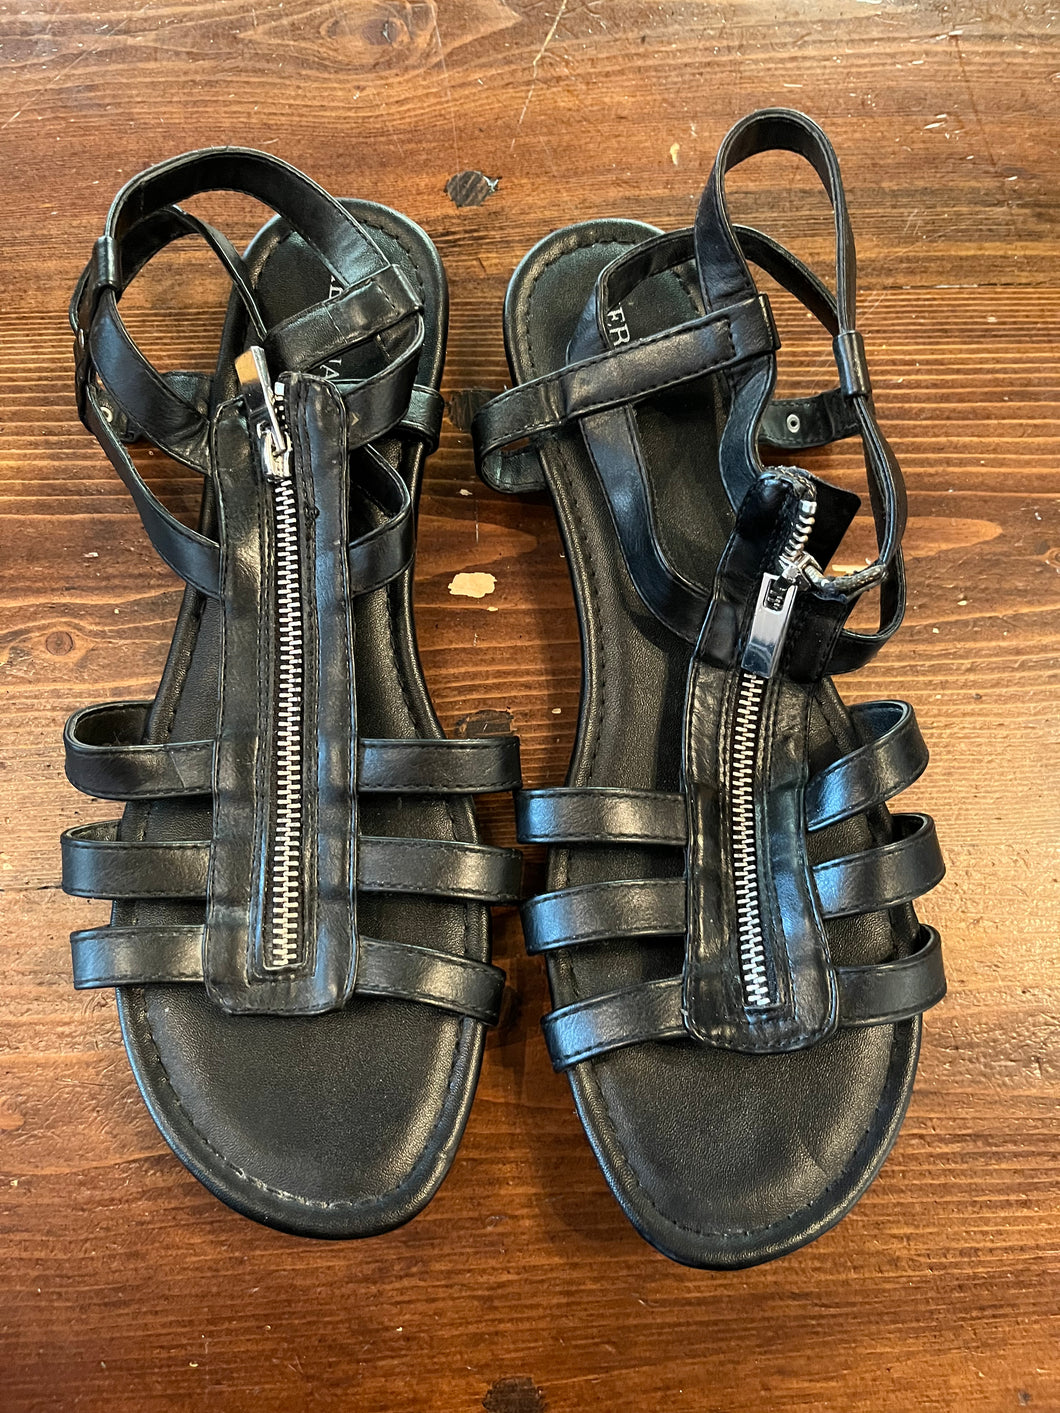 Merona Gladiator Sandals (Size 11)